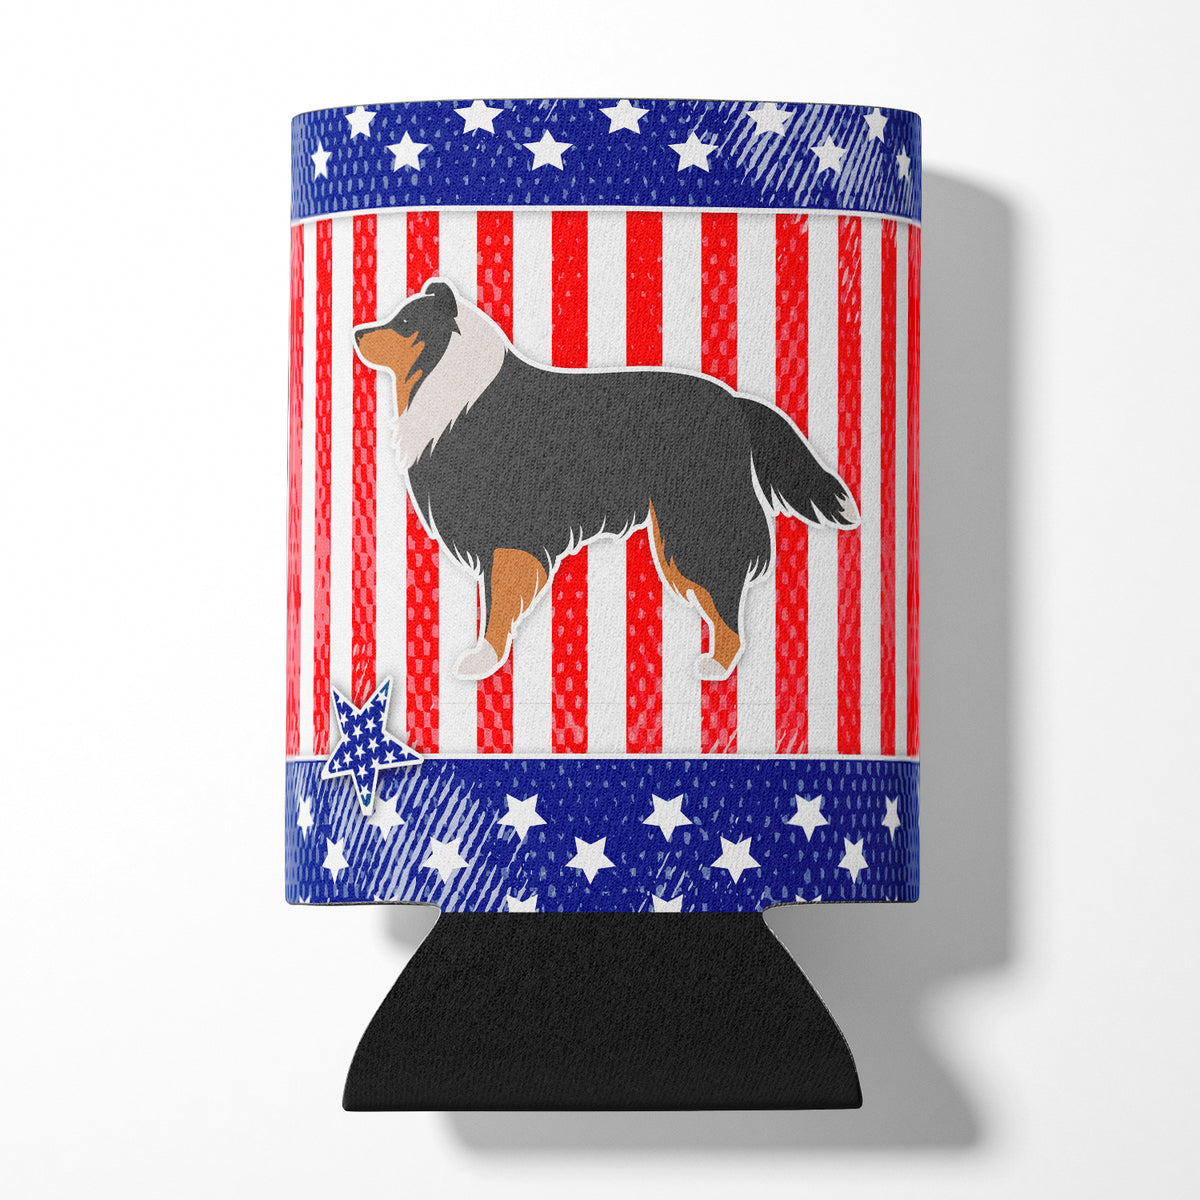 USA Patriotic Sheltie/Shetland Sheepdog Can ou Bottle Hugger BB3330CC